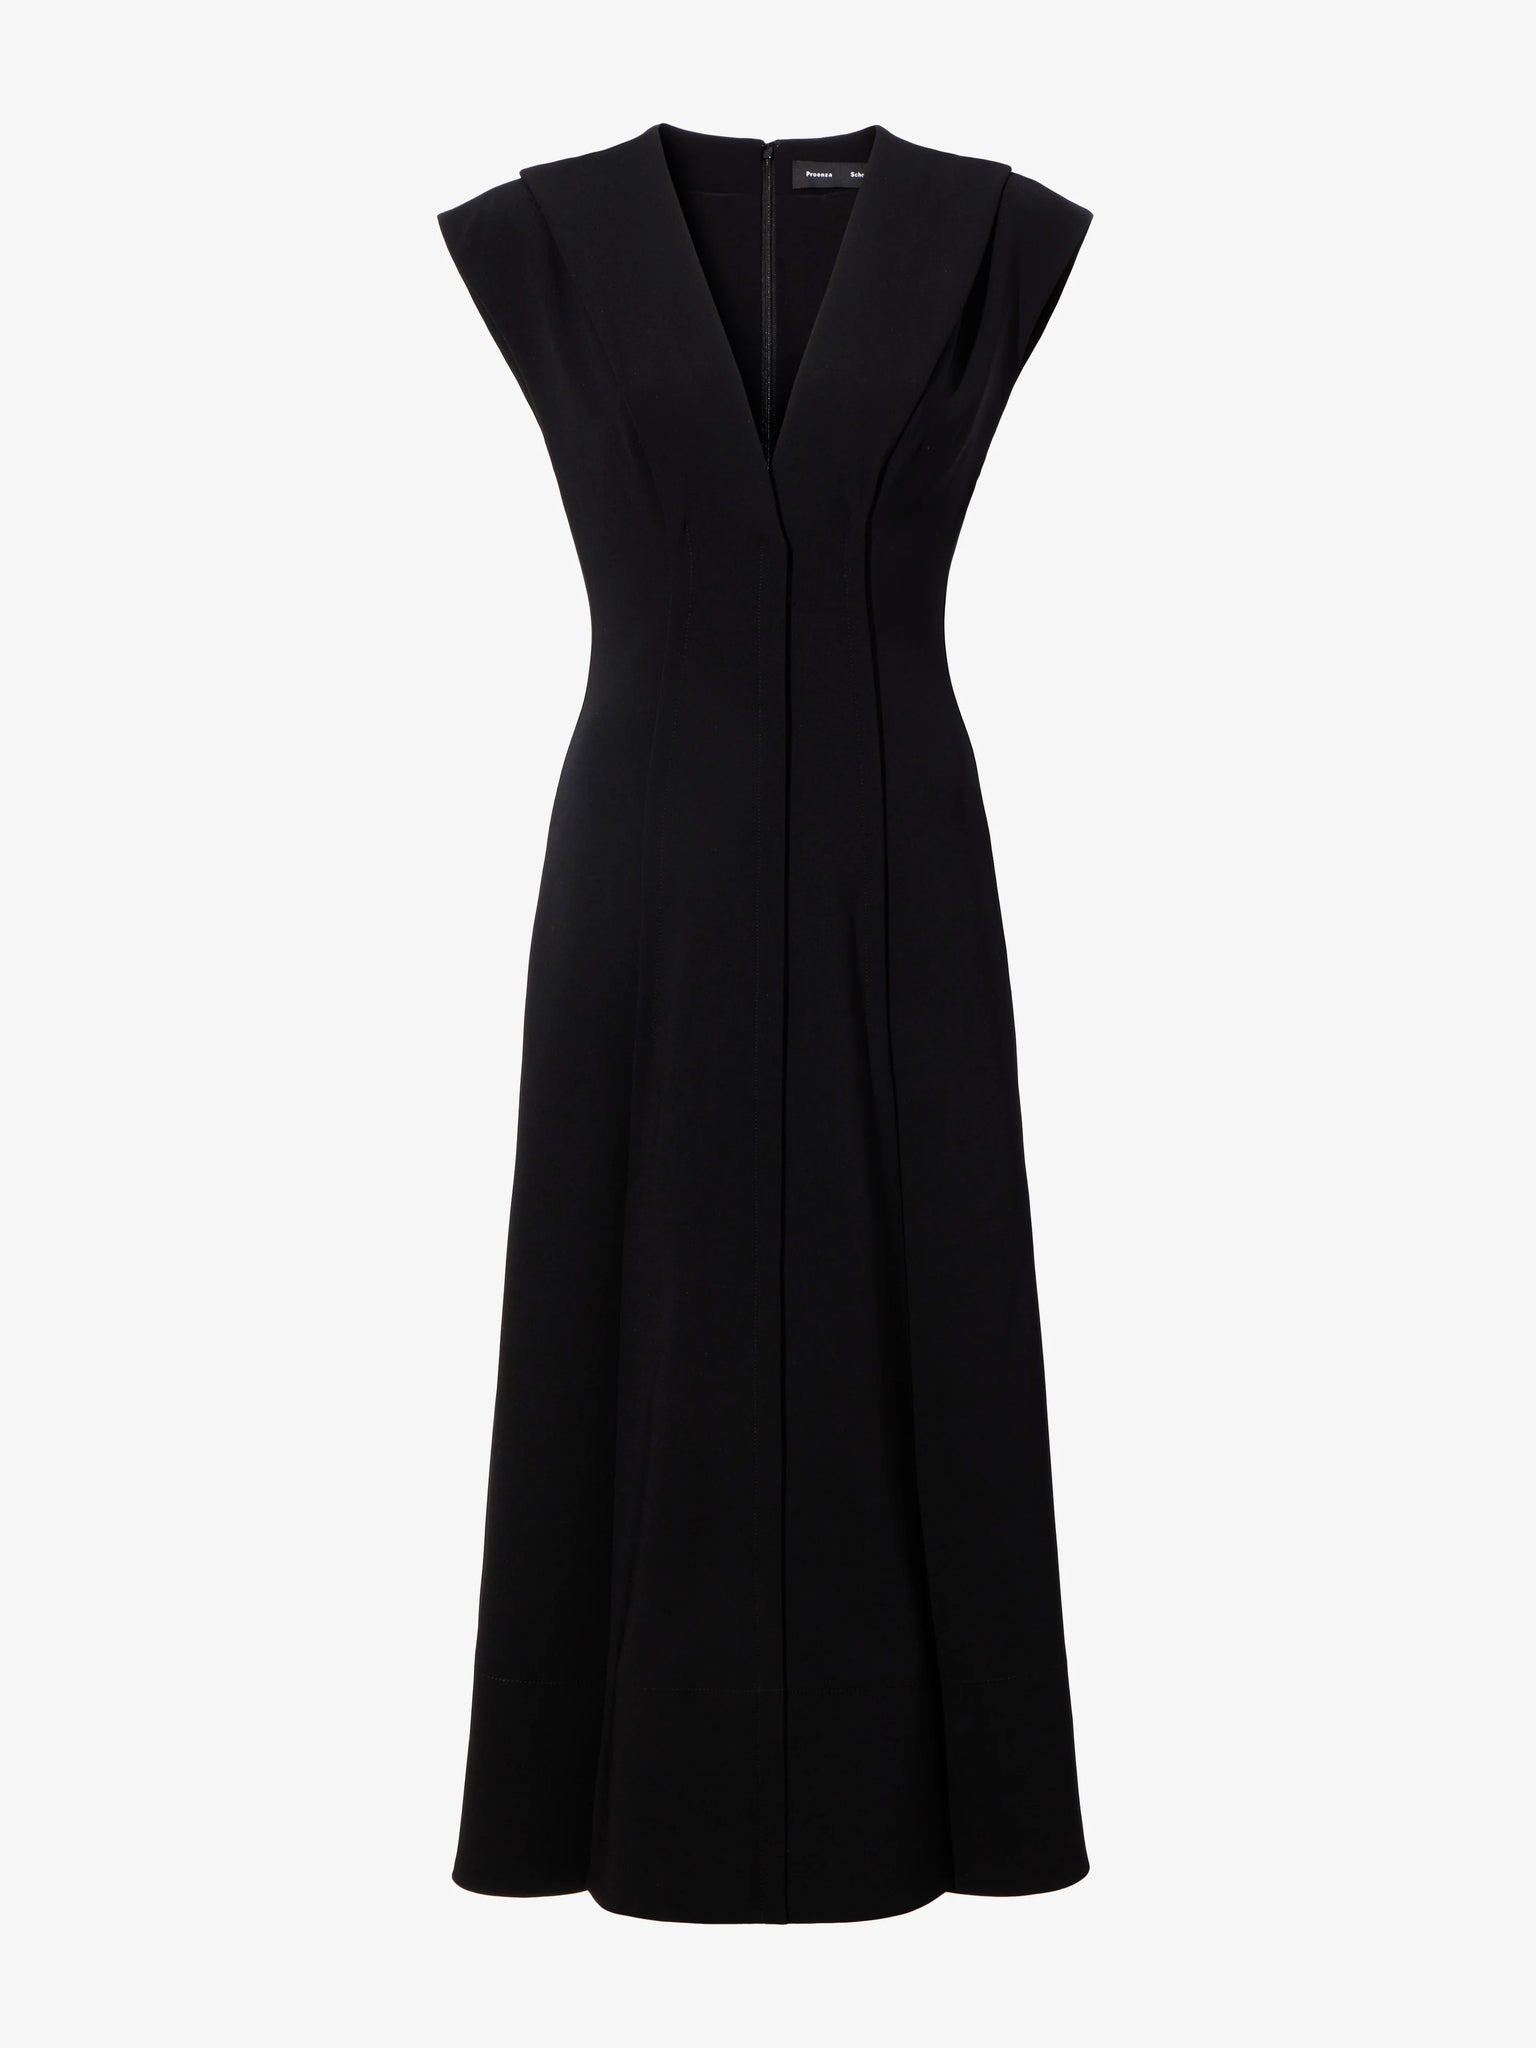 Matte Viscose Crepe Dress in Black